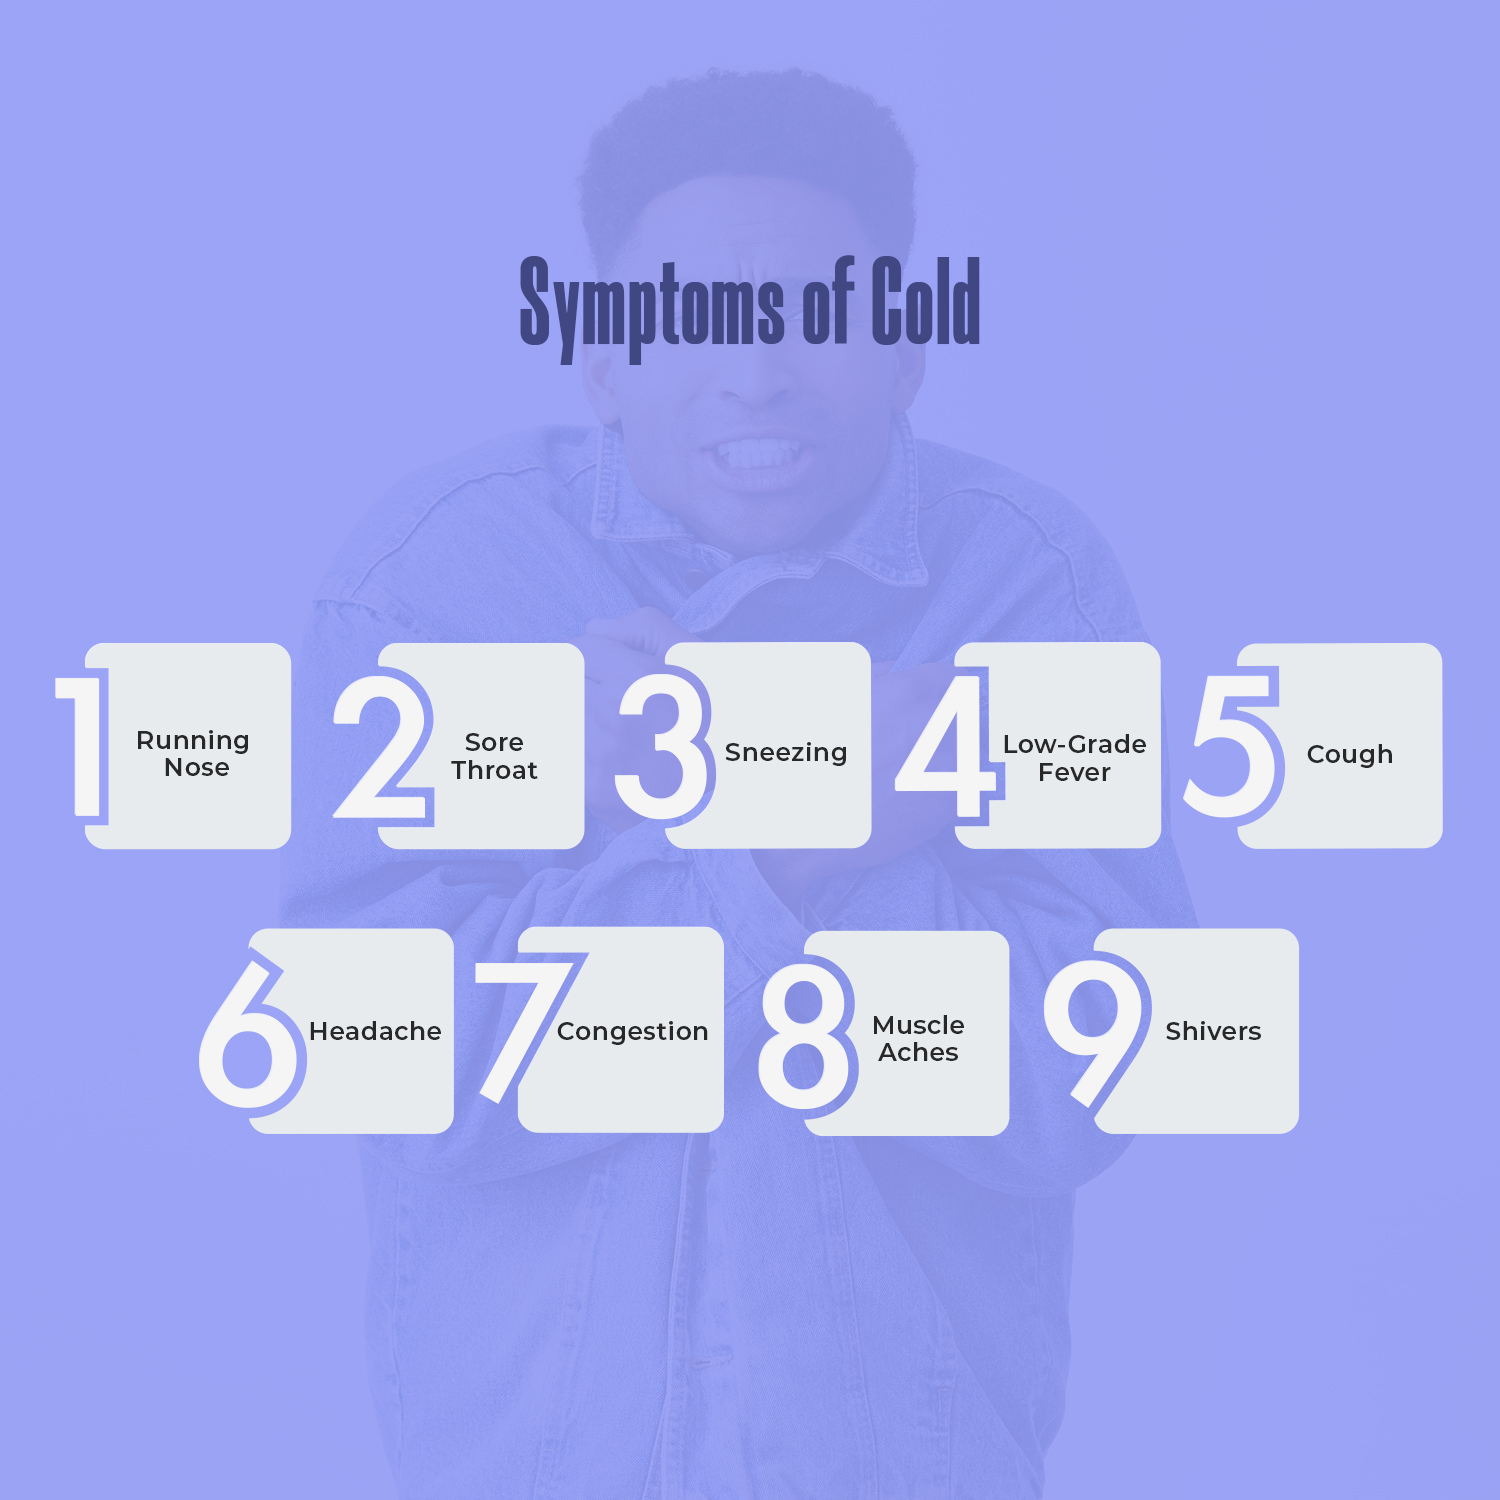 Symptoms of Cold